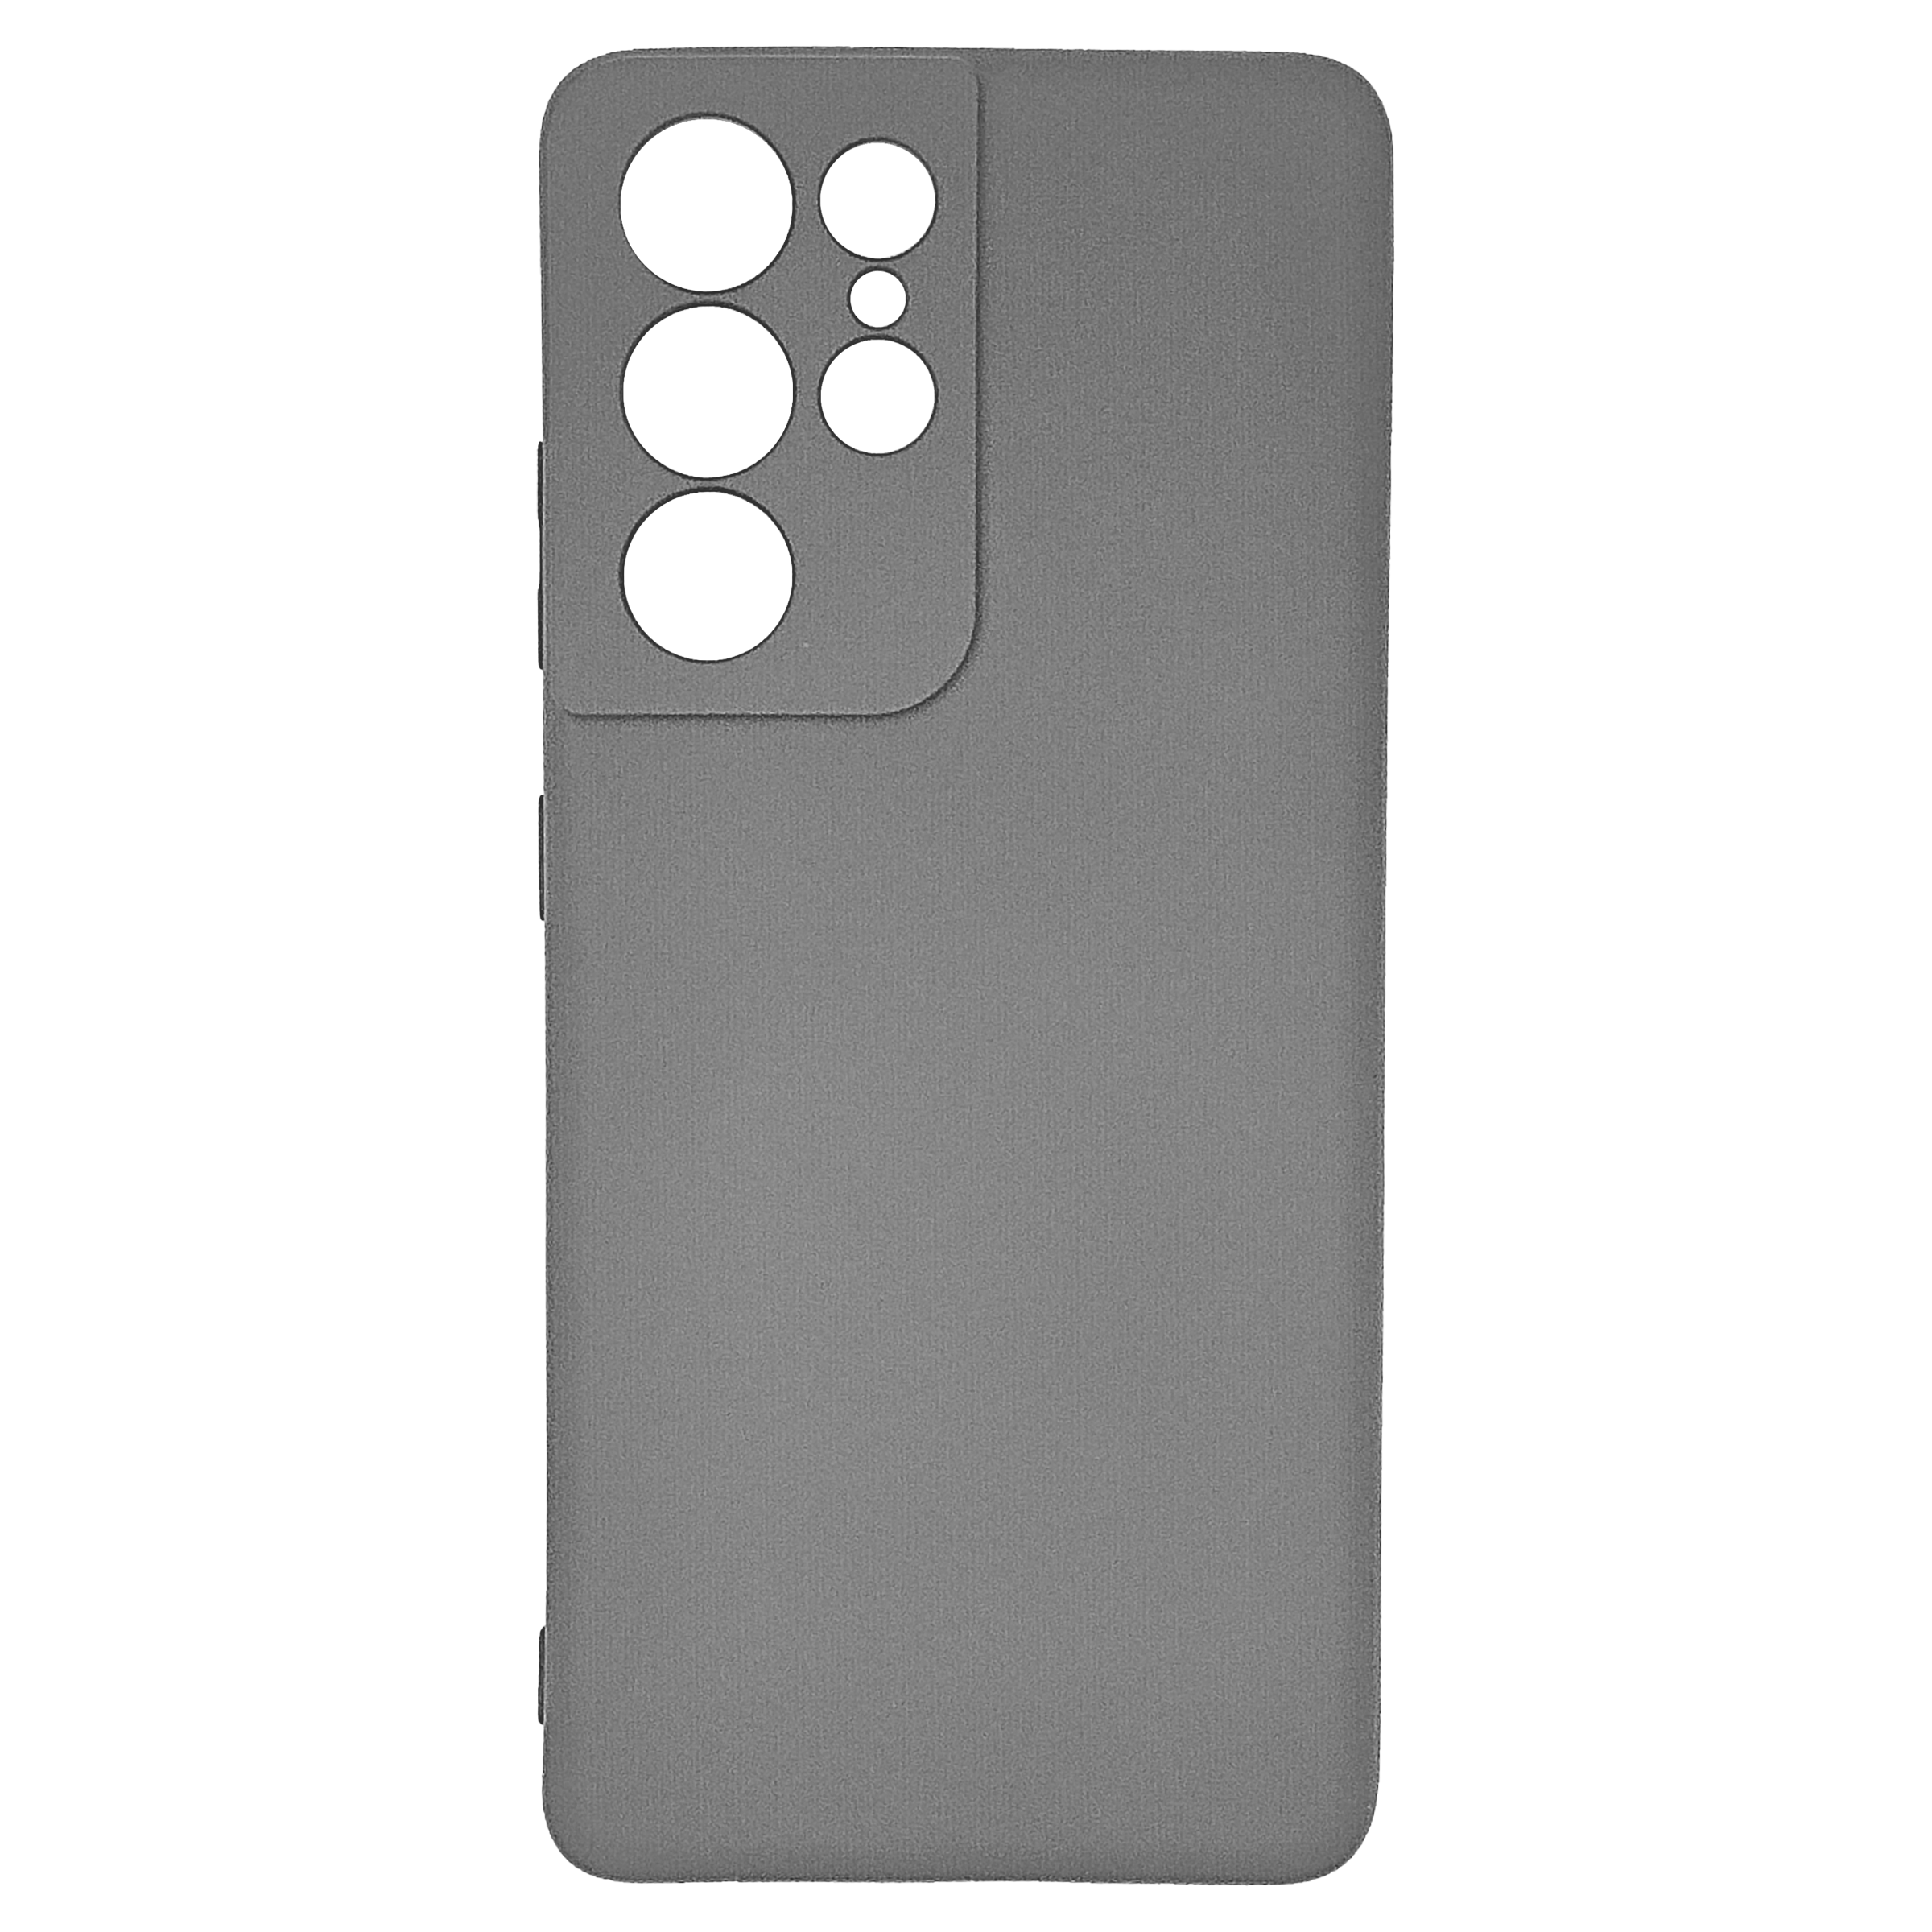 Soundrevo TPU Back Case For Samsung Galaxy S21 Ultra (Anti-Slip, C021U, Grey)_1